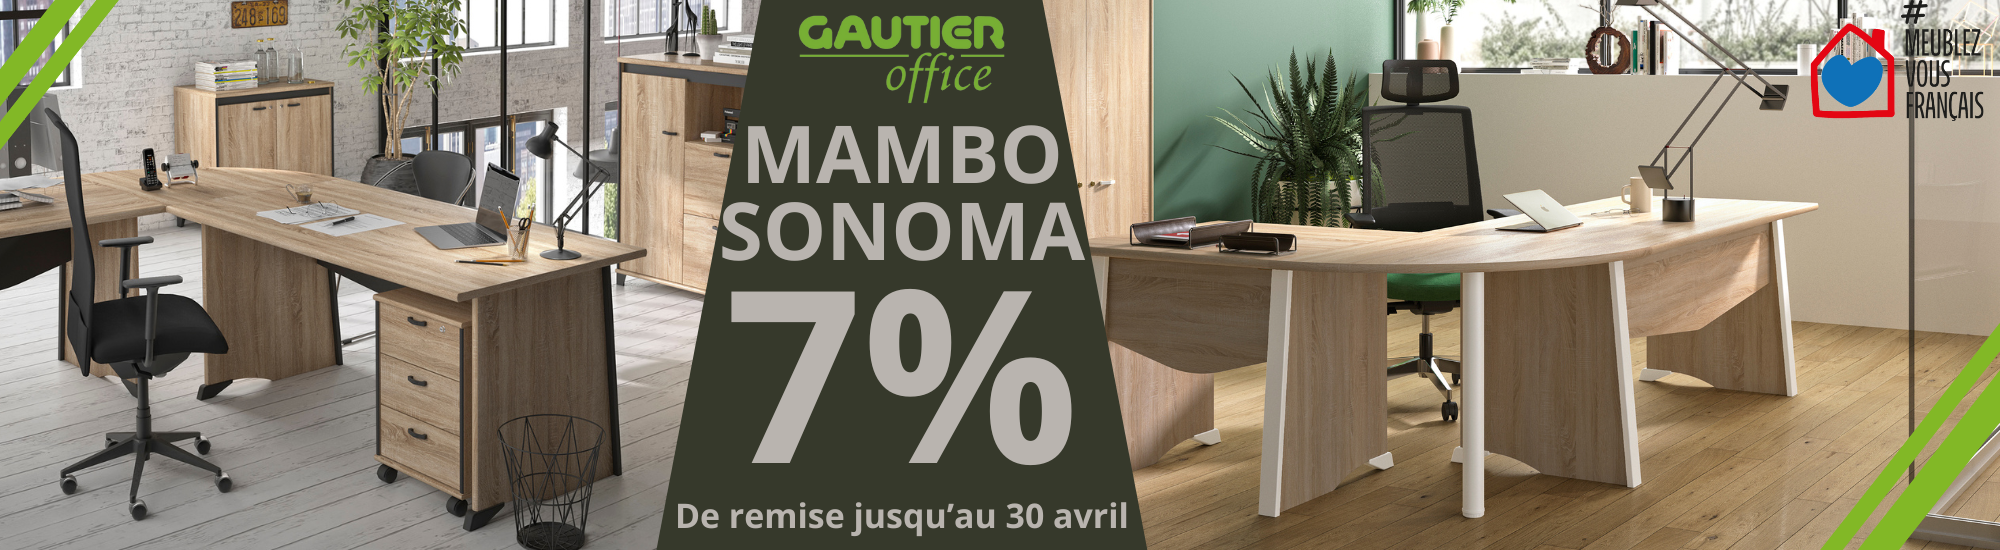 Gautier Office Mambo SONOMA